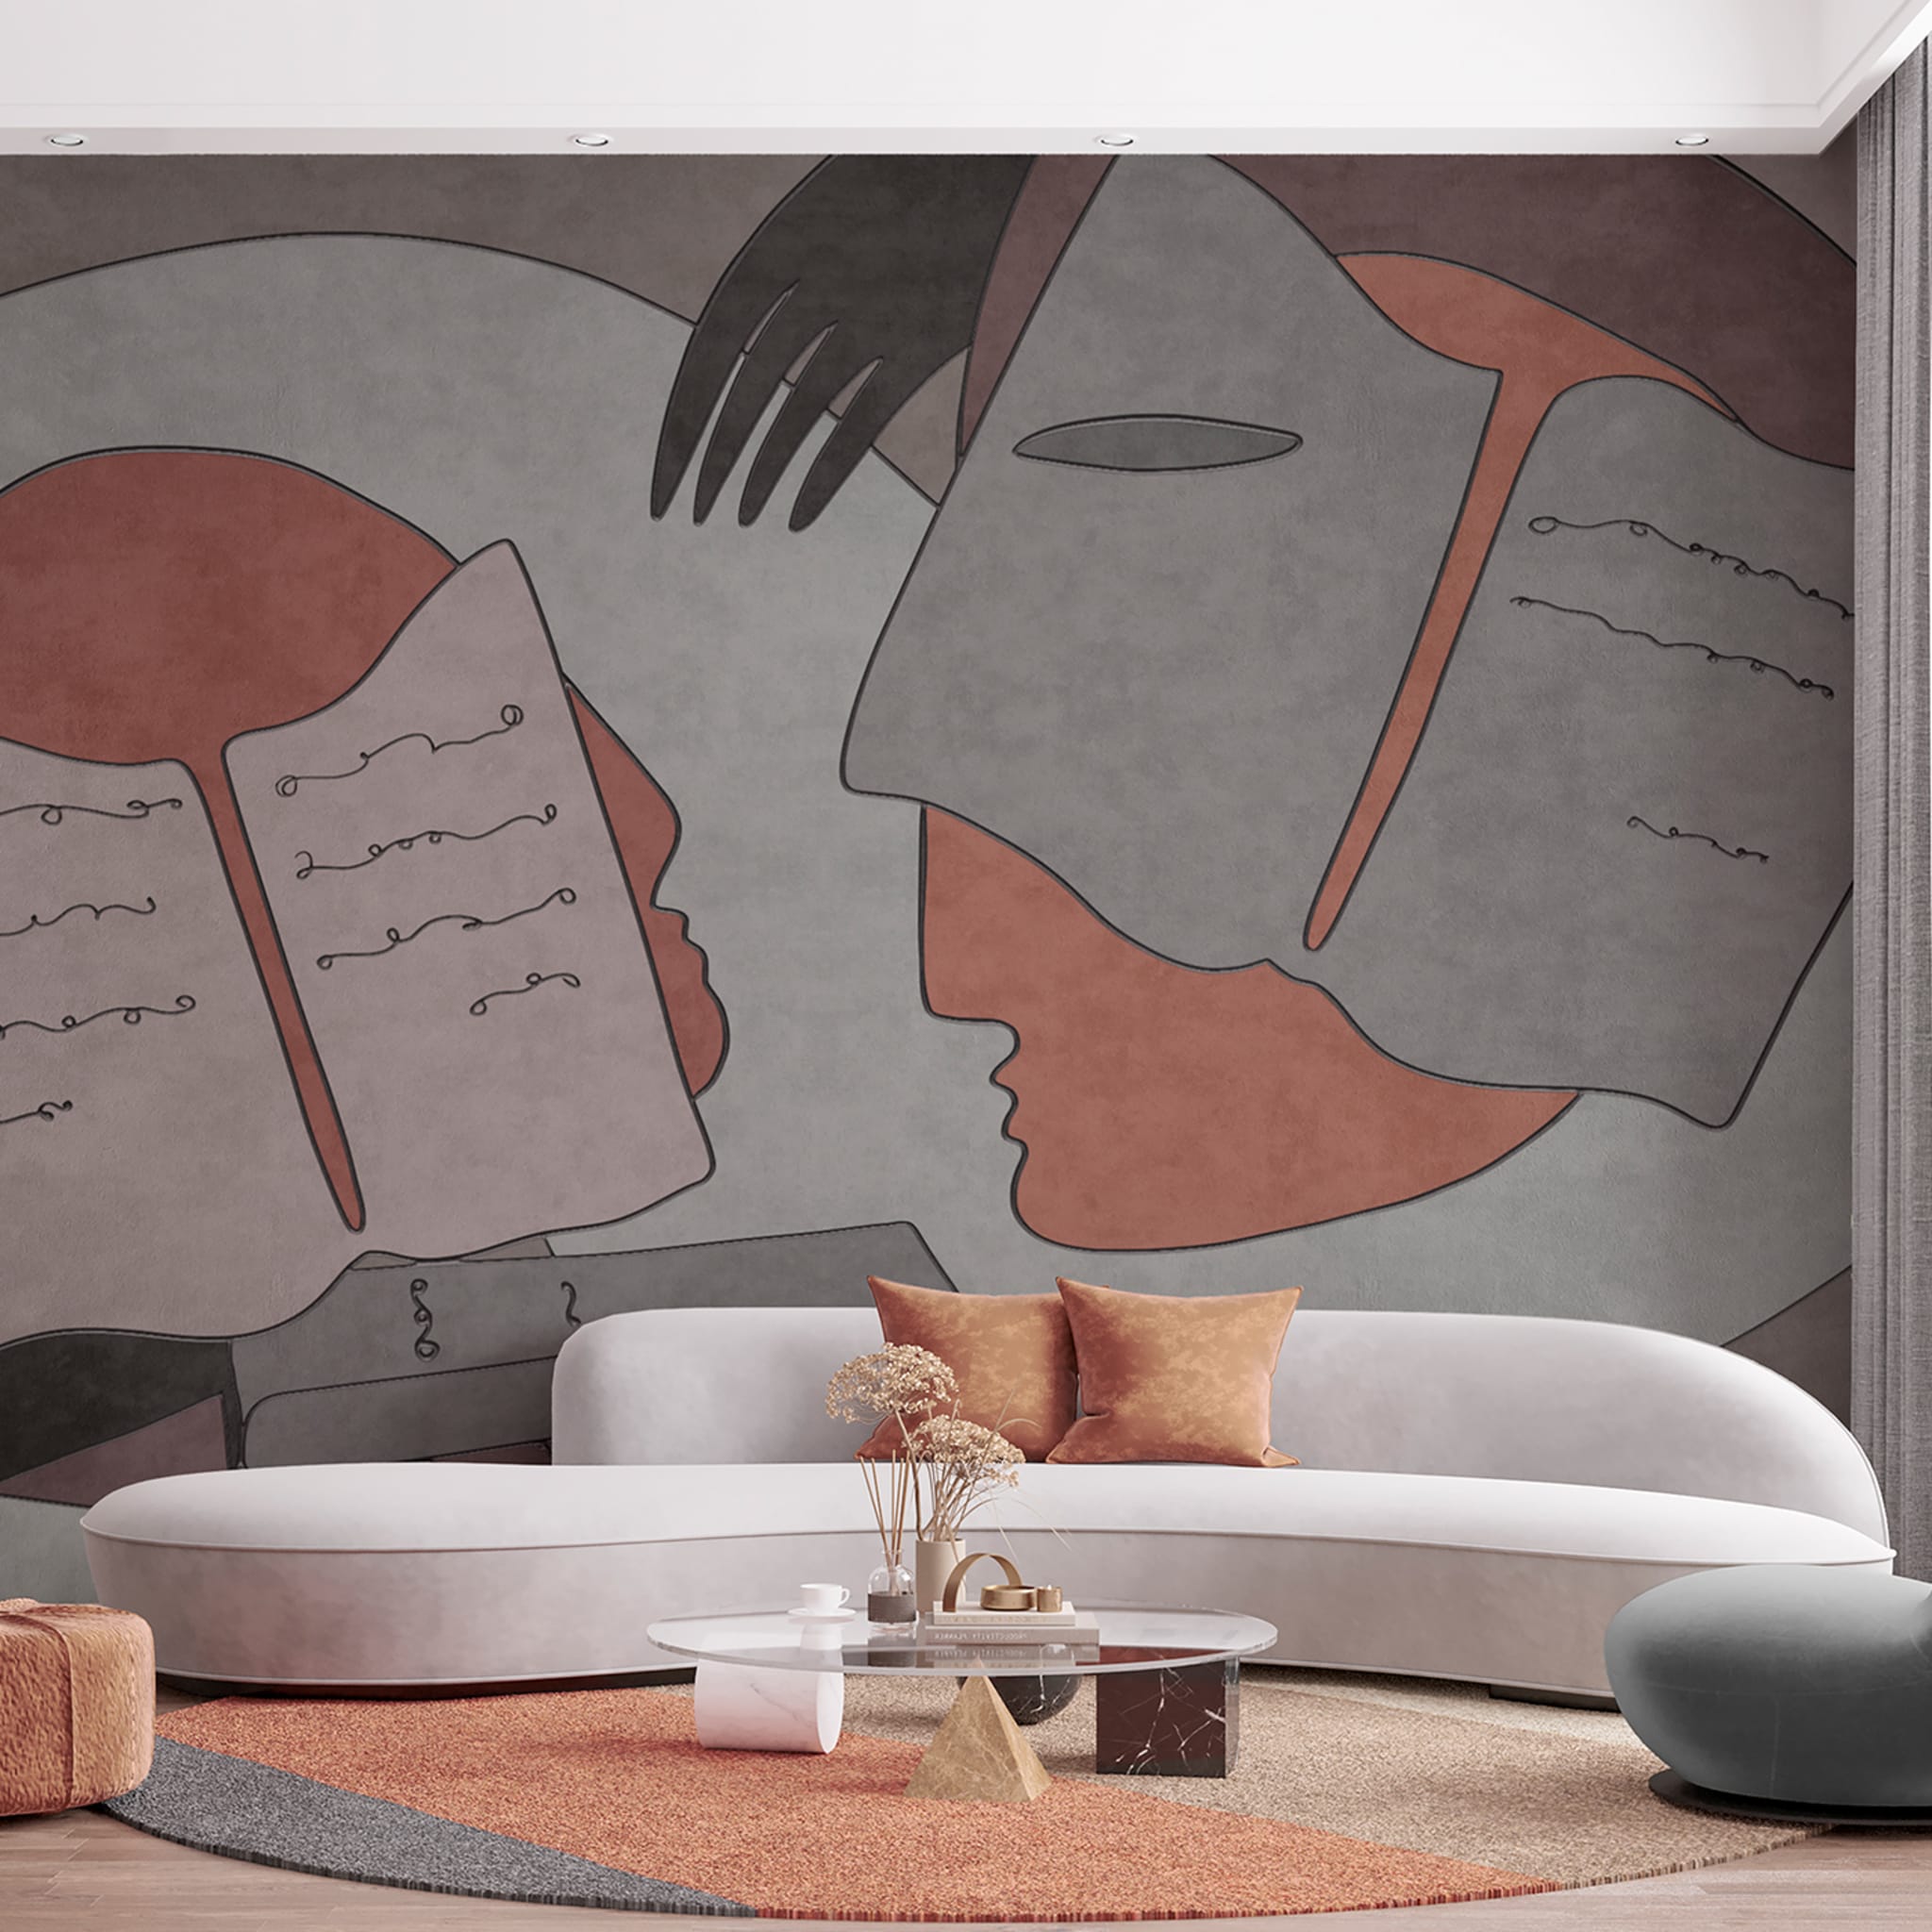 Greyish self introspection textured wallpaper - Alternative view 1